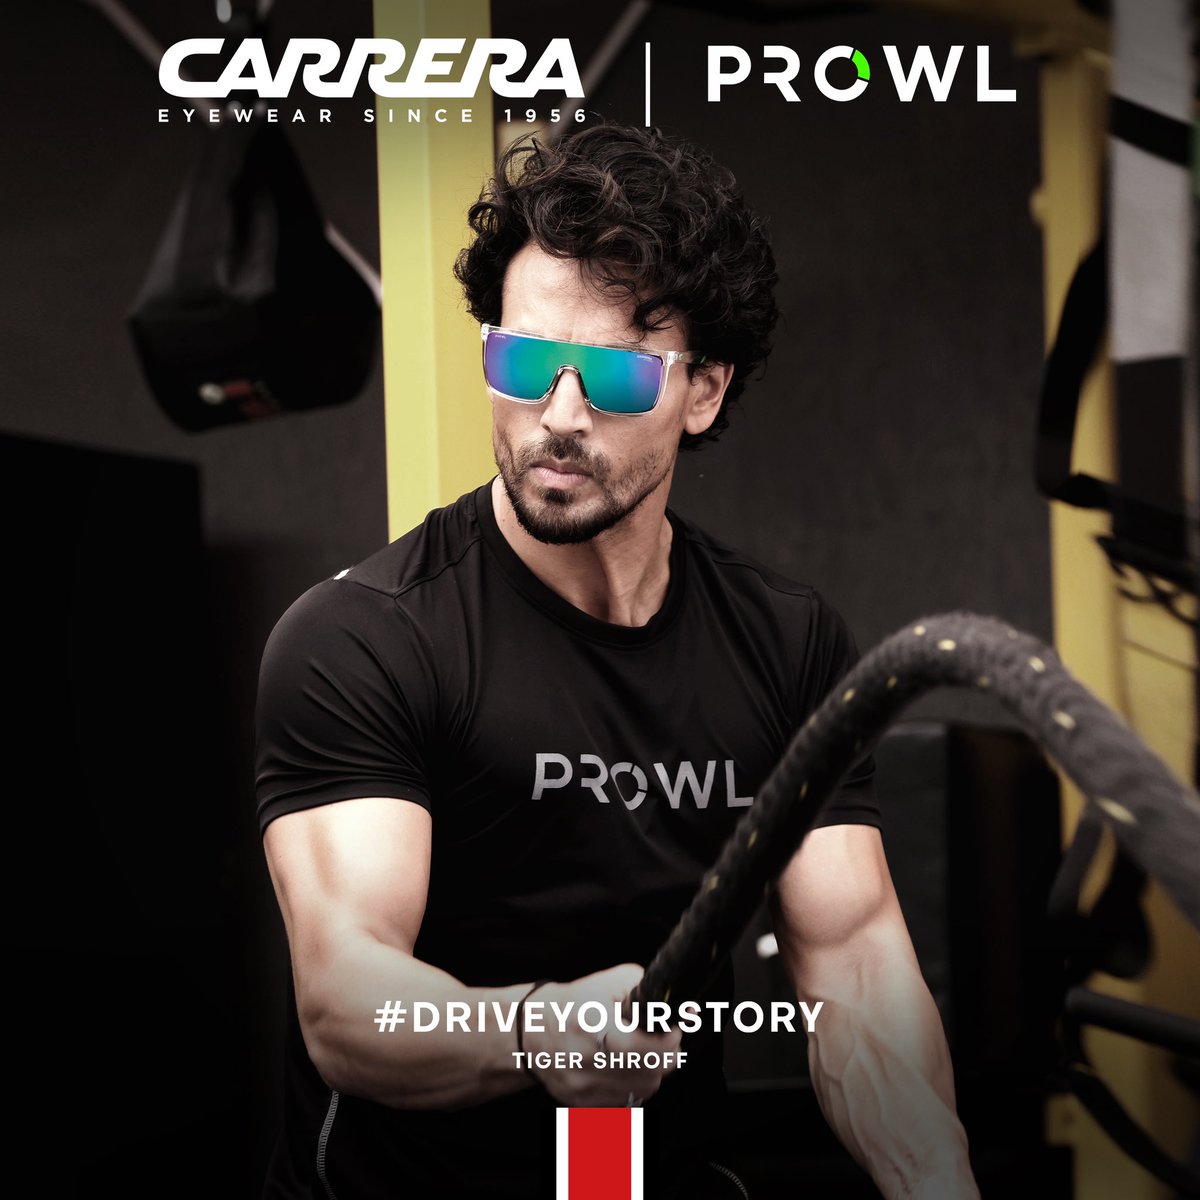 Prowl X Carrera Coming to you, really soon! Stay tuned. #CarreraProwl #Prowl #Eyewear #safilo #carrera #shades #frames #eyeweardesign #sunnies #accessories